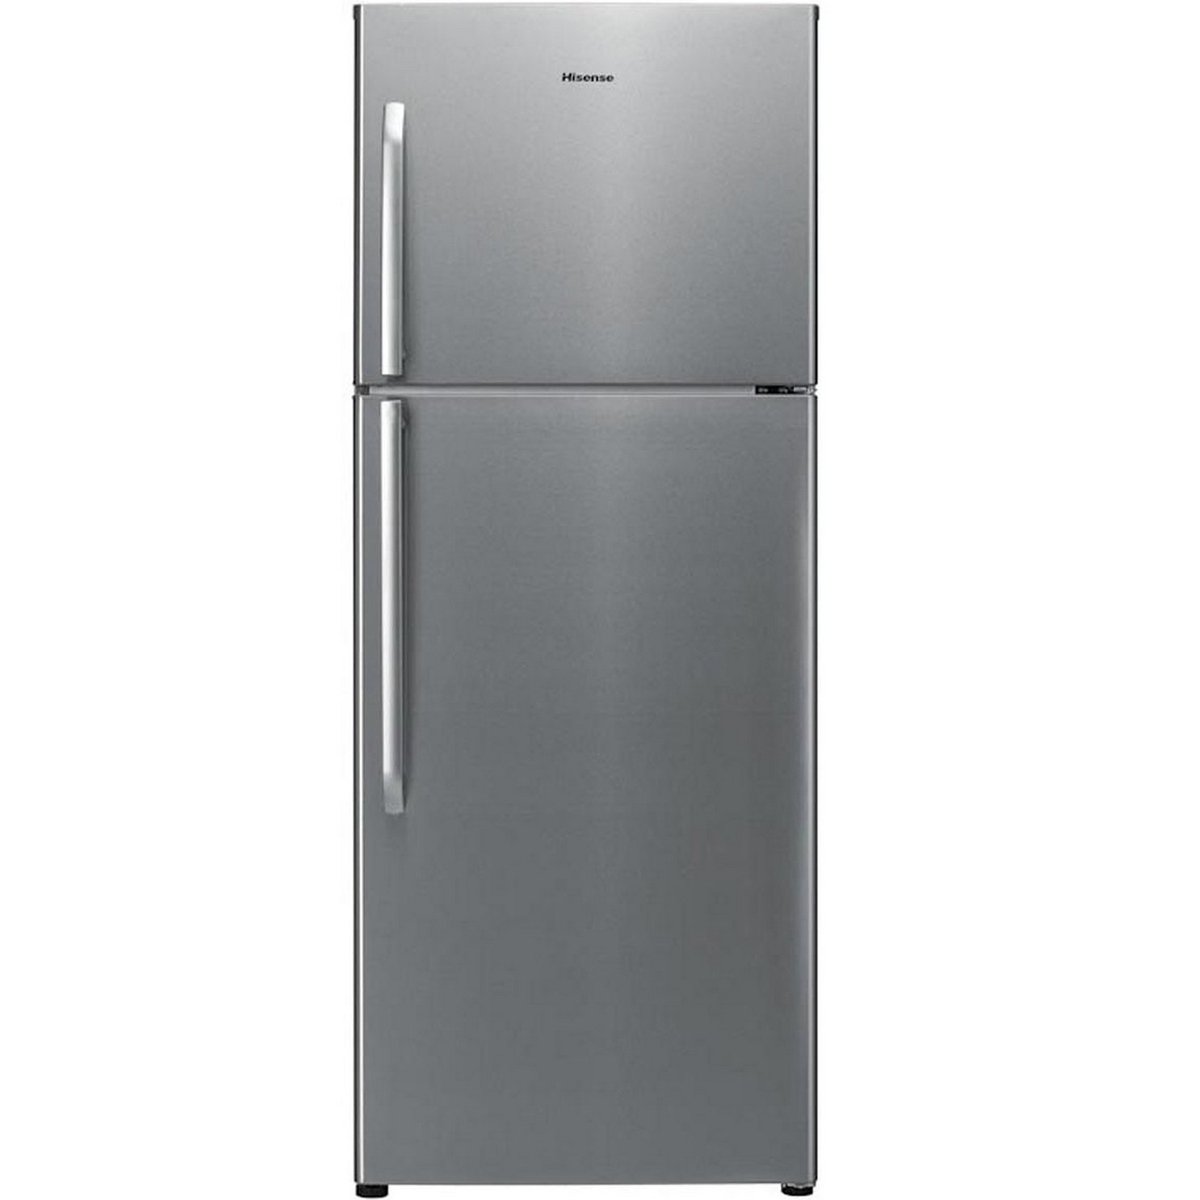 Hisense Double Door Refrigerator RT650NAIS 650Ltr